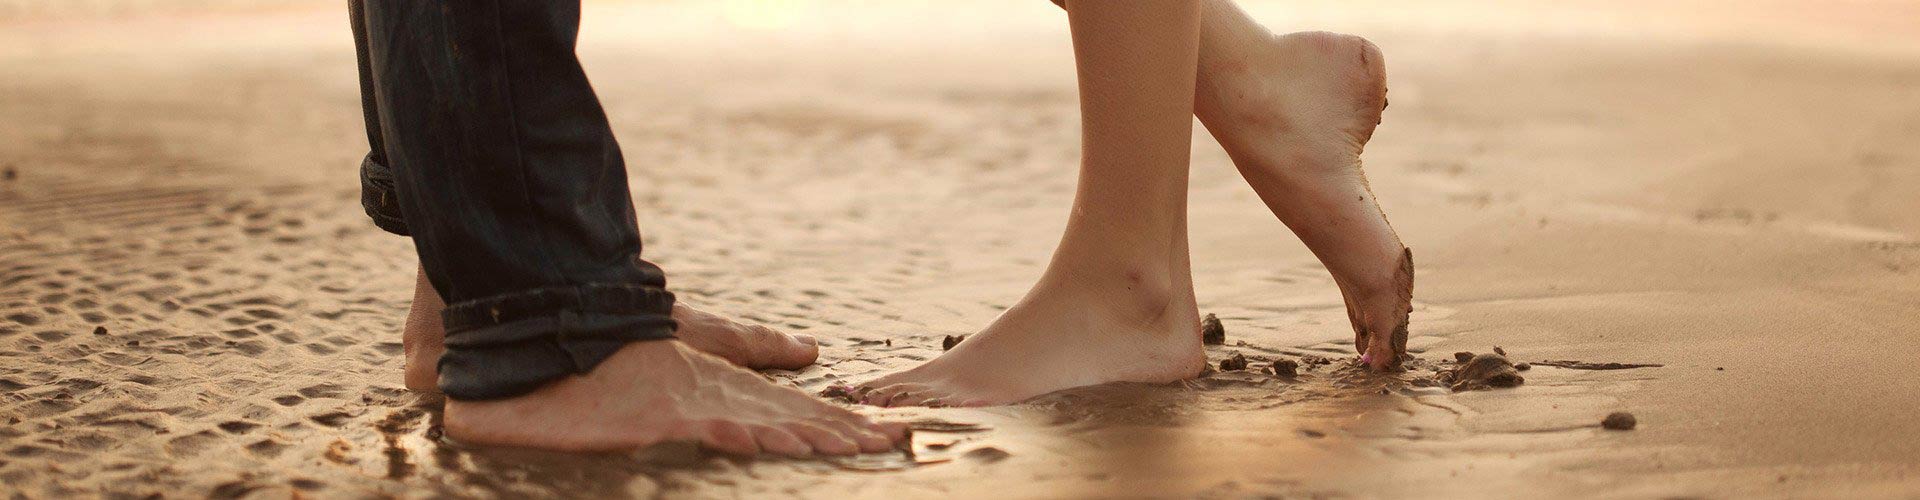 Feet of Man & Woman